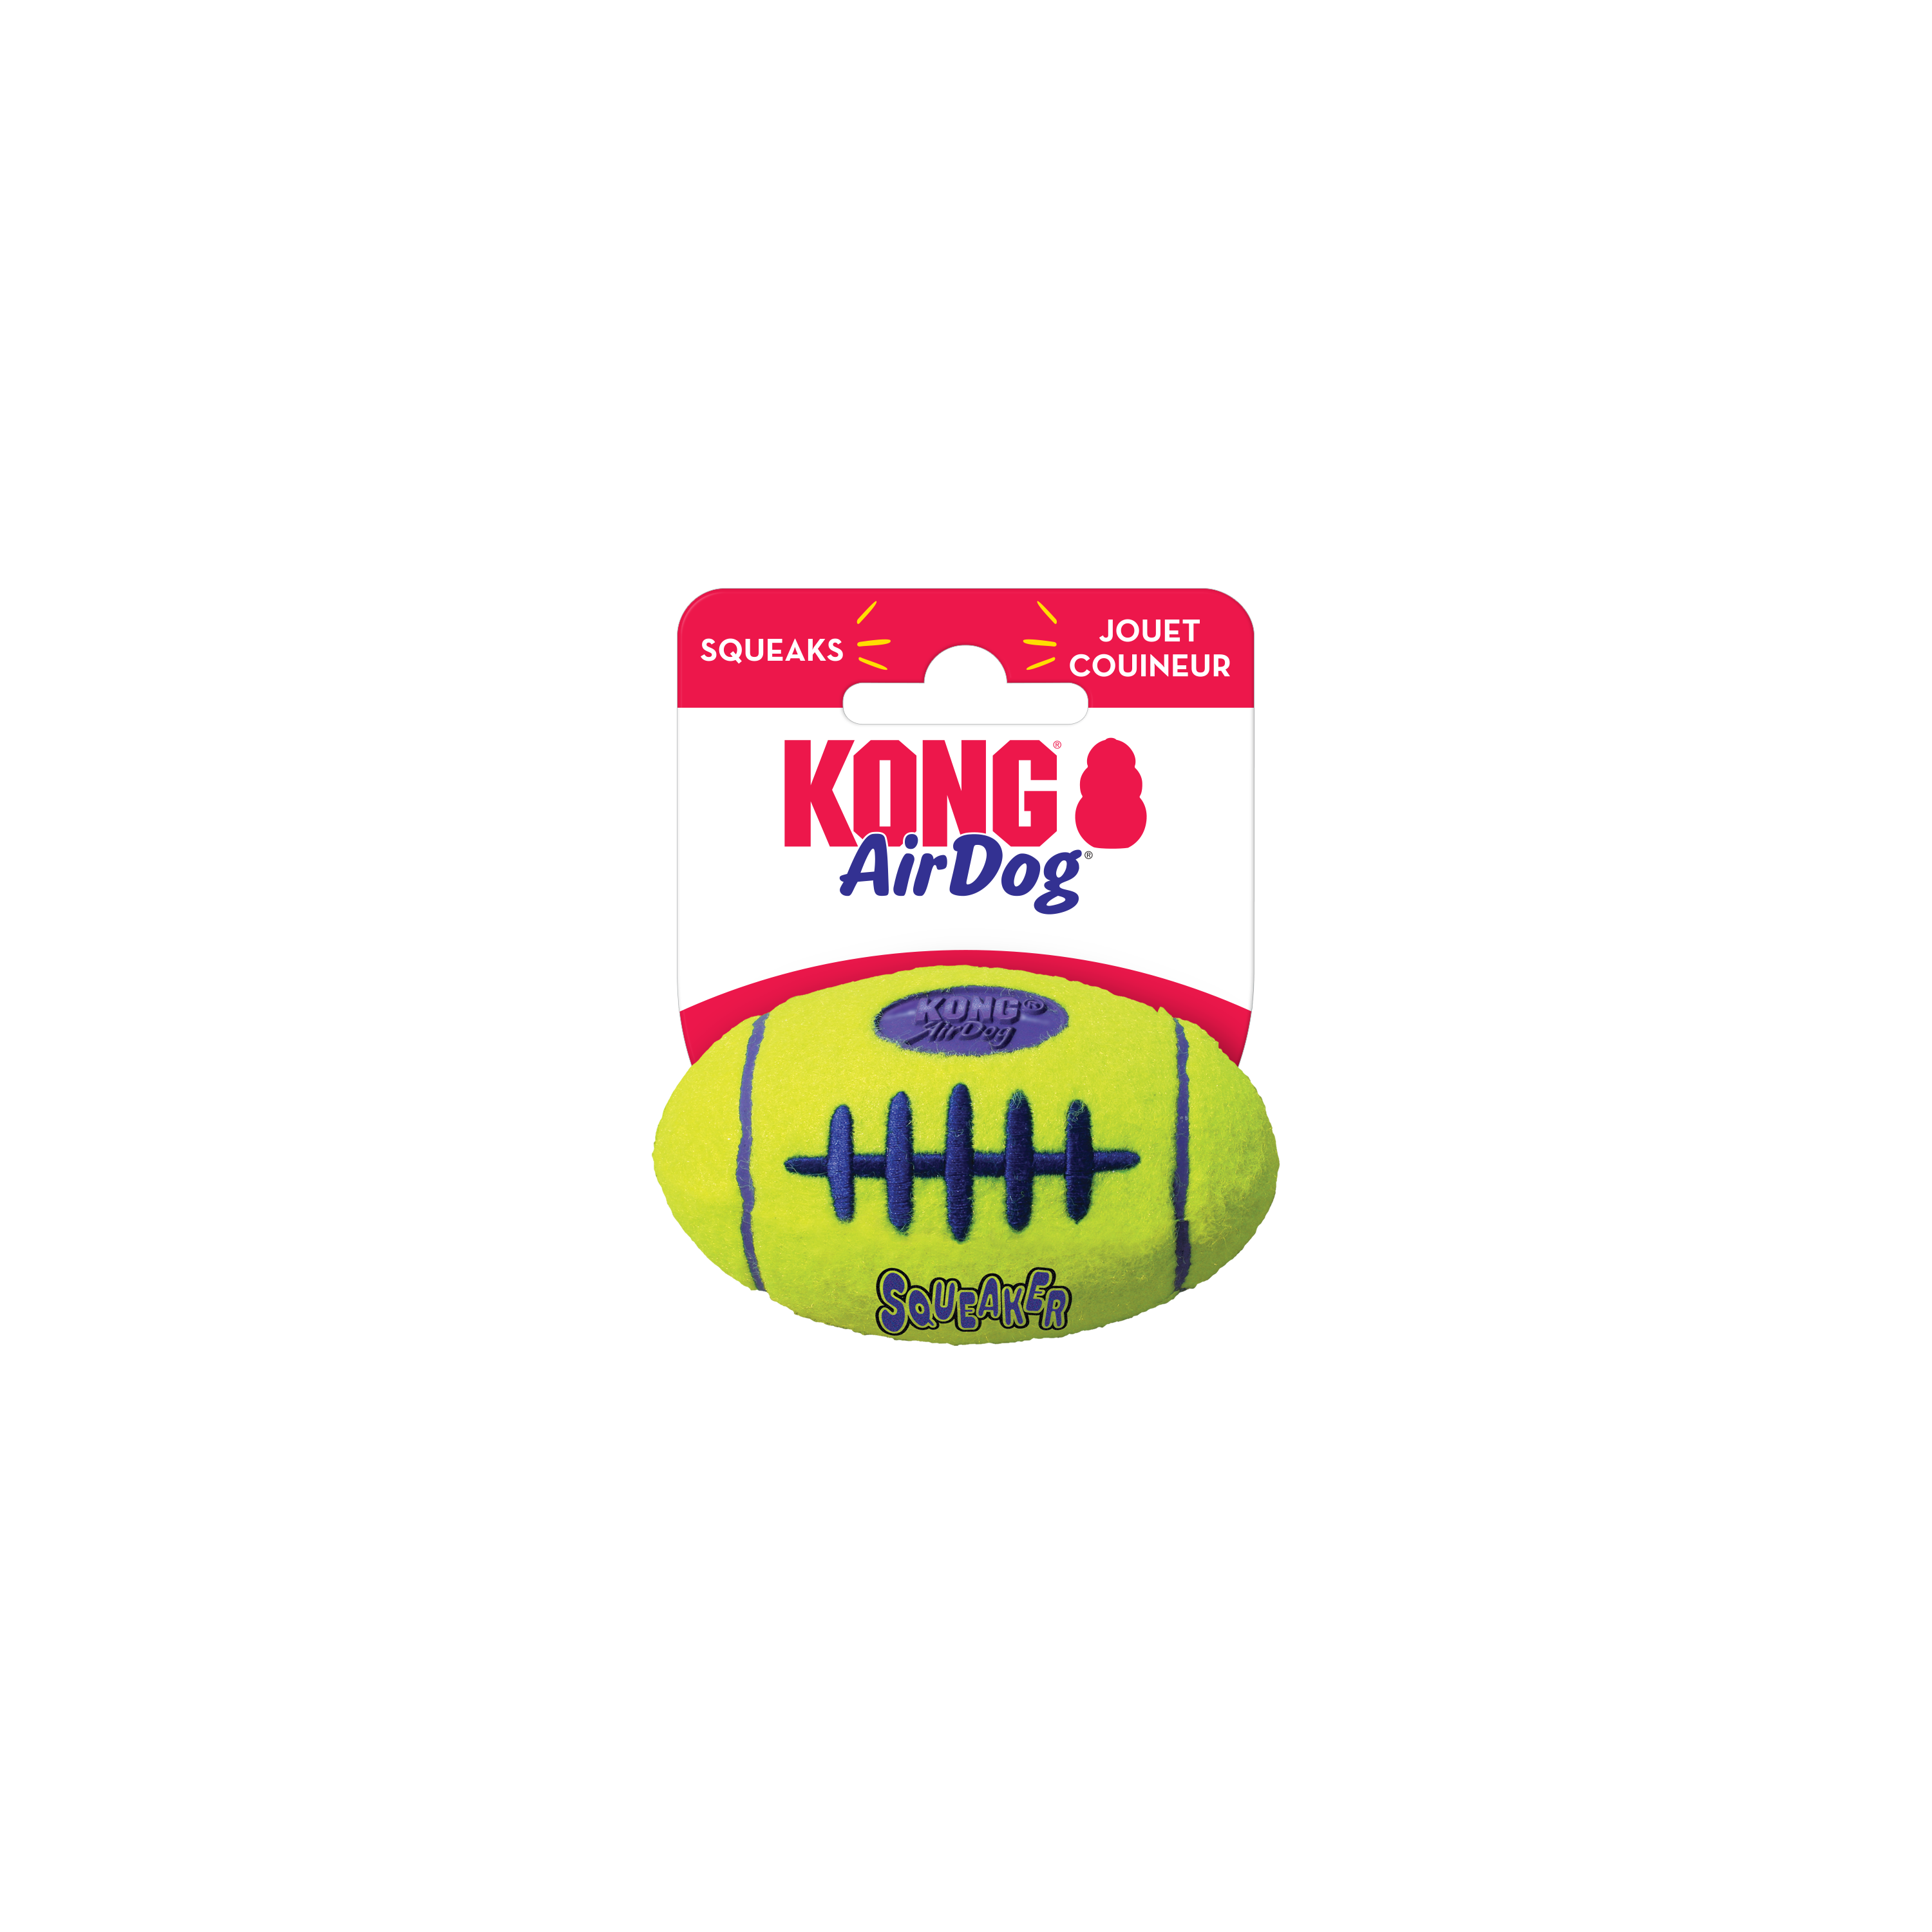 AirDog Squeaker Football onpack imagen de producto